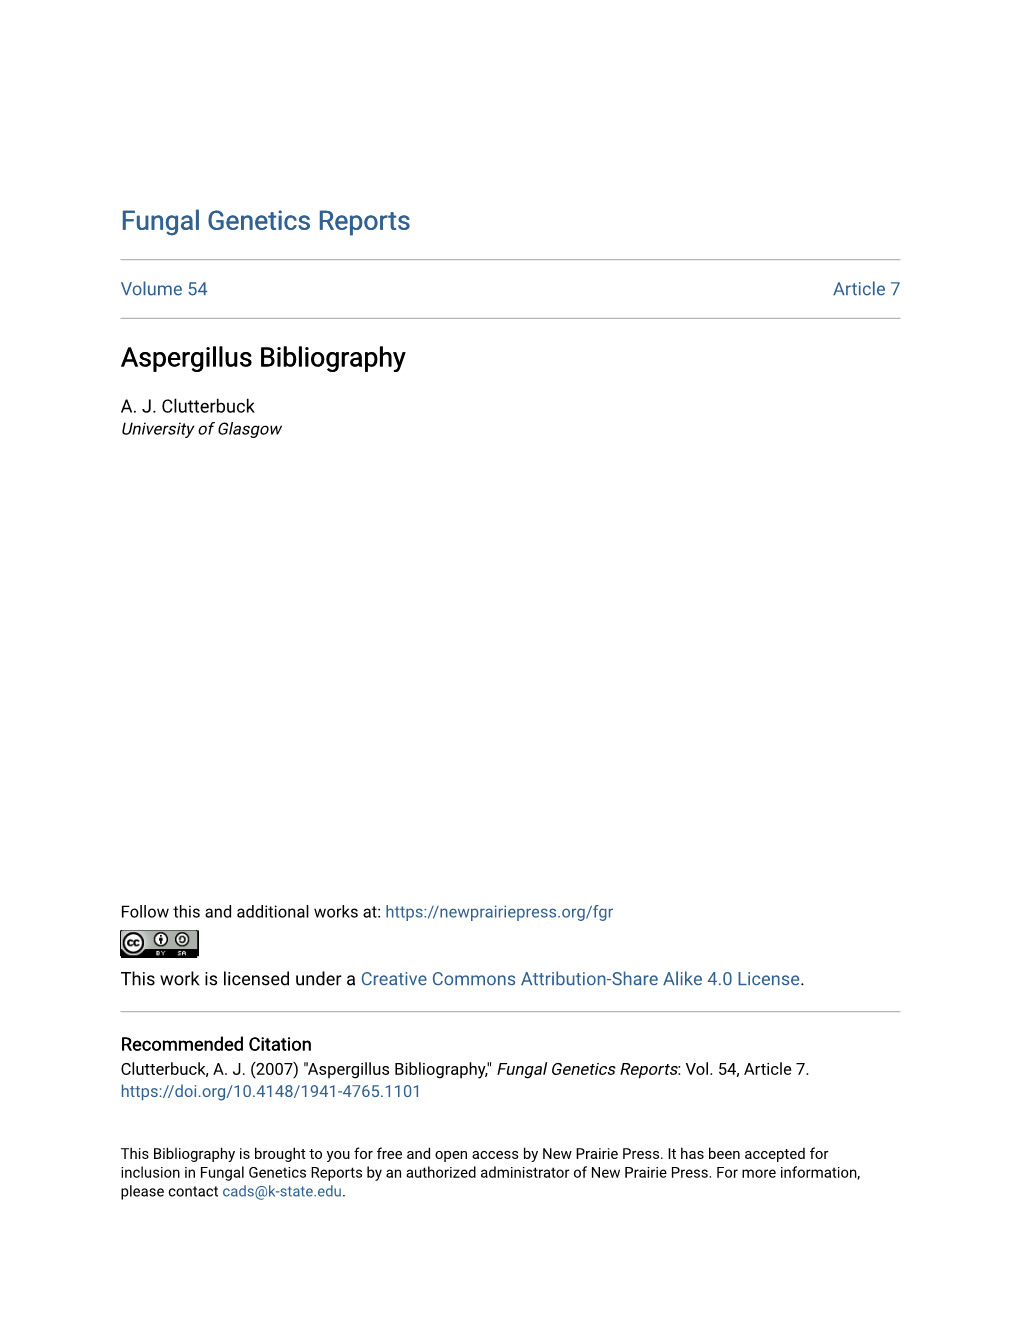 Aspergillus Bibliography